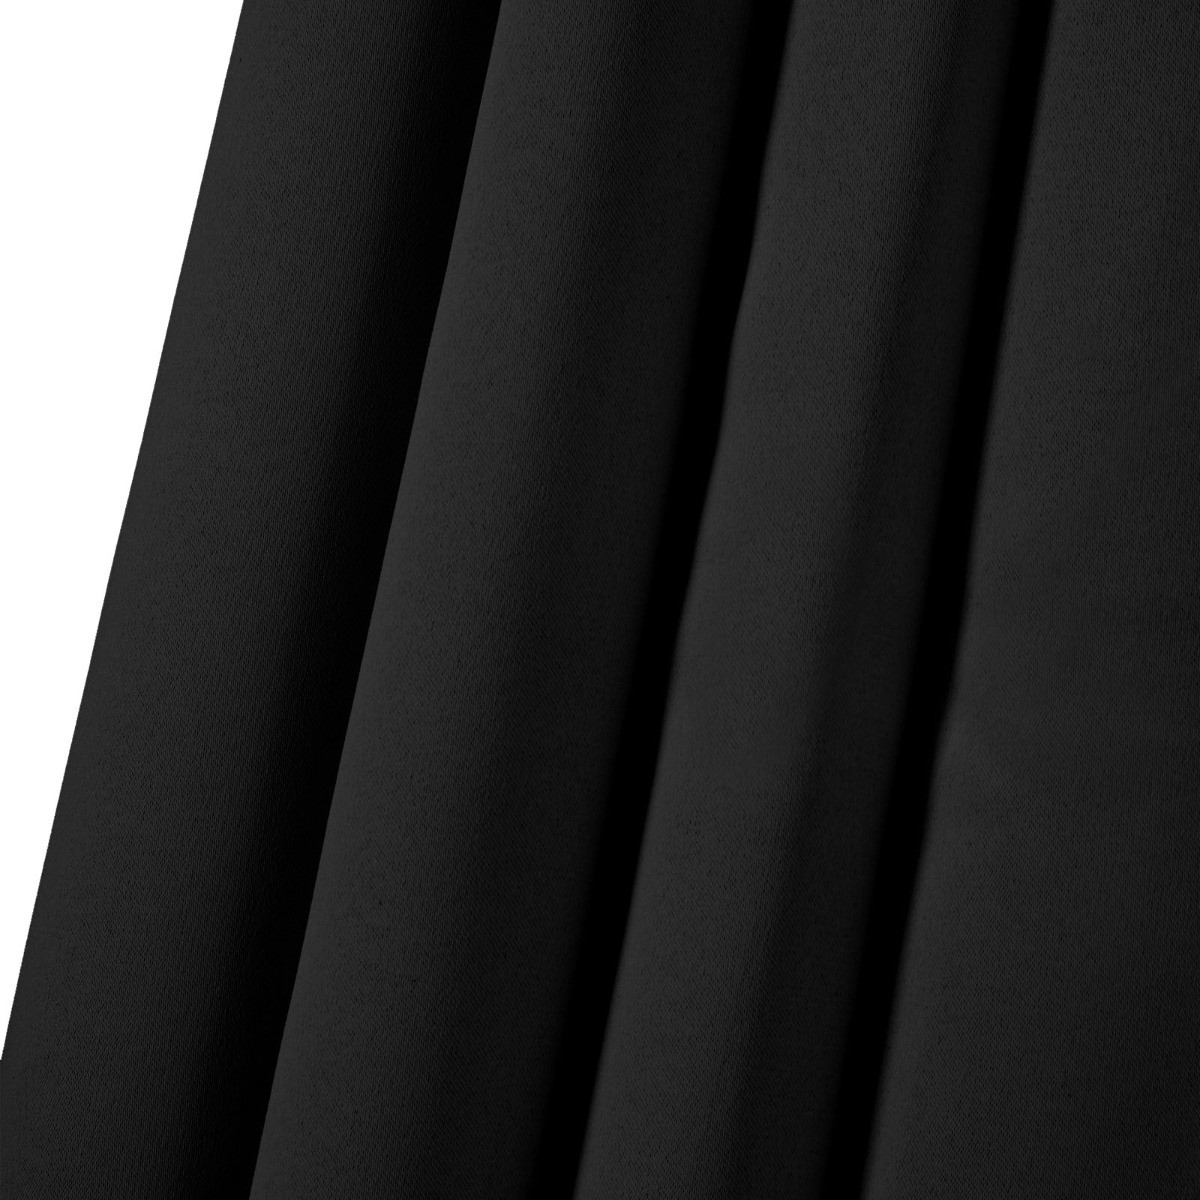 Dreamscene Pencil Pleat Thermal Blackout Curtains - Black, 46" x 54">